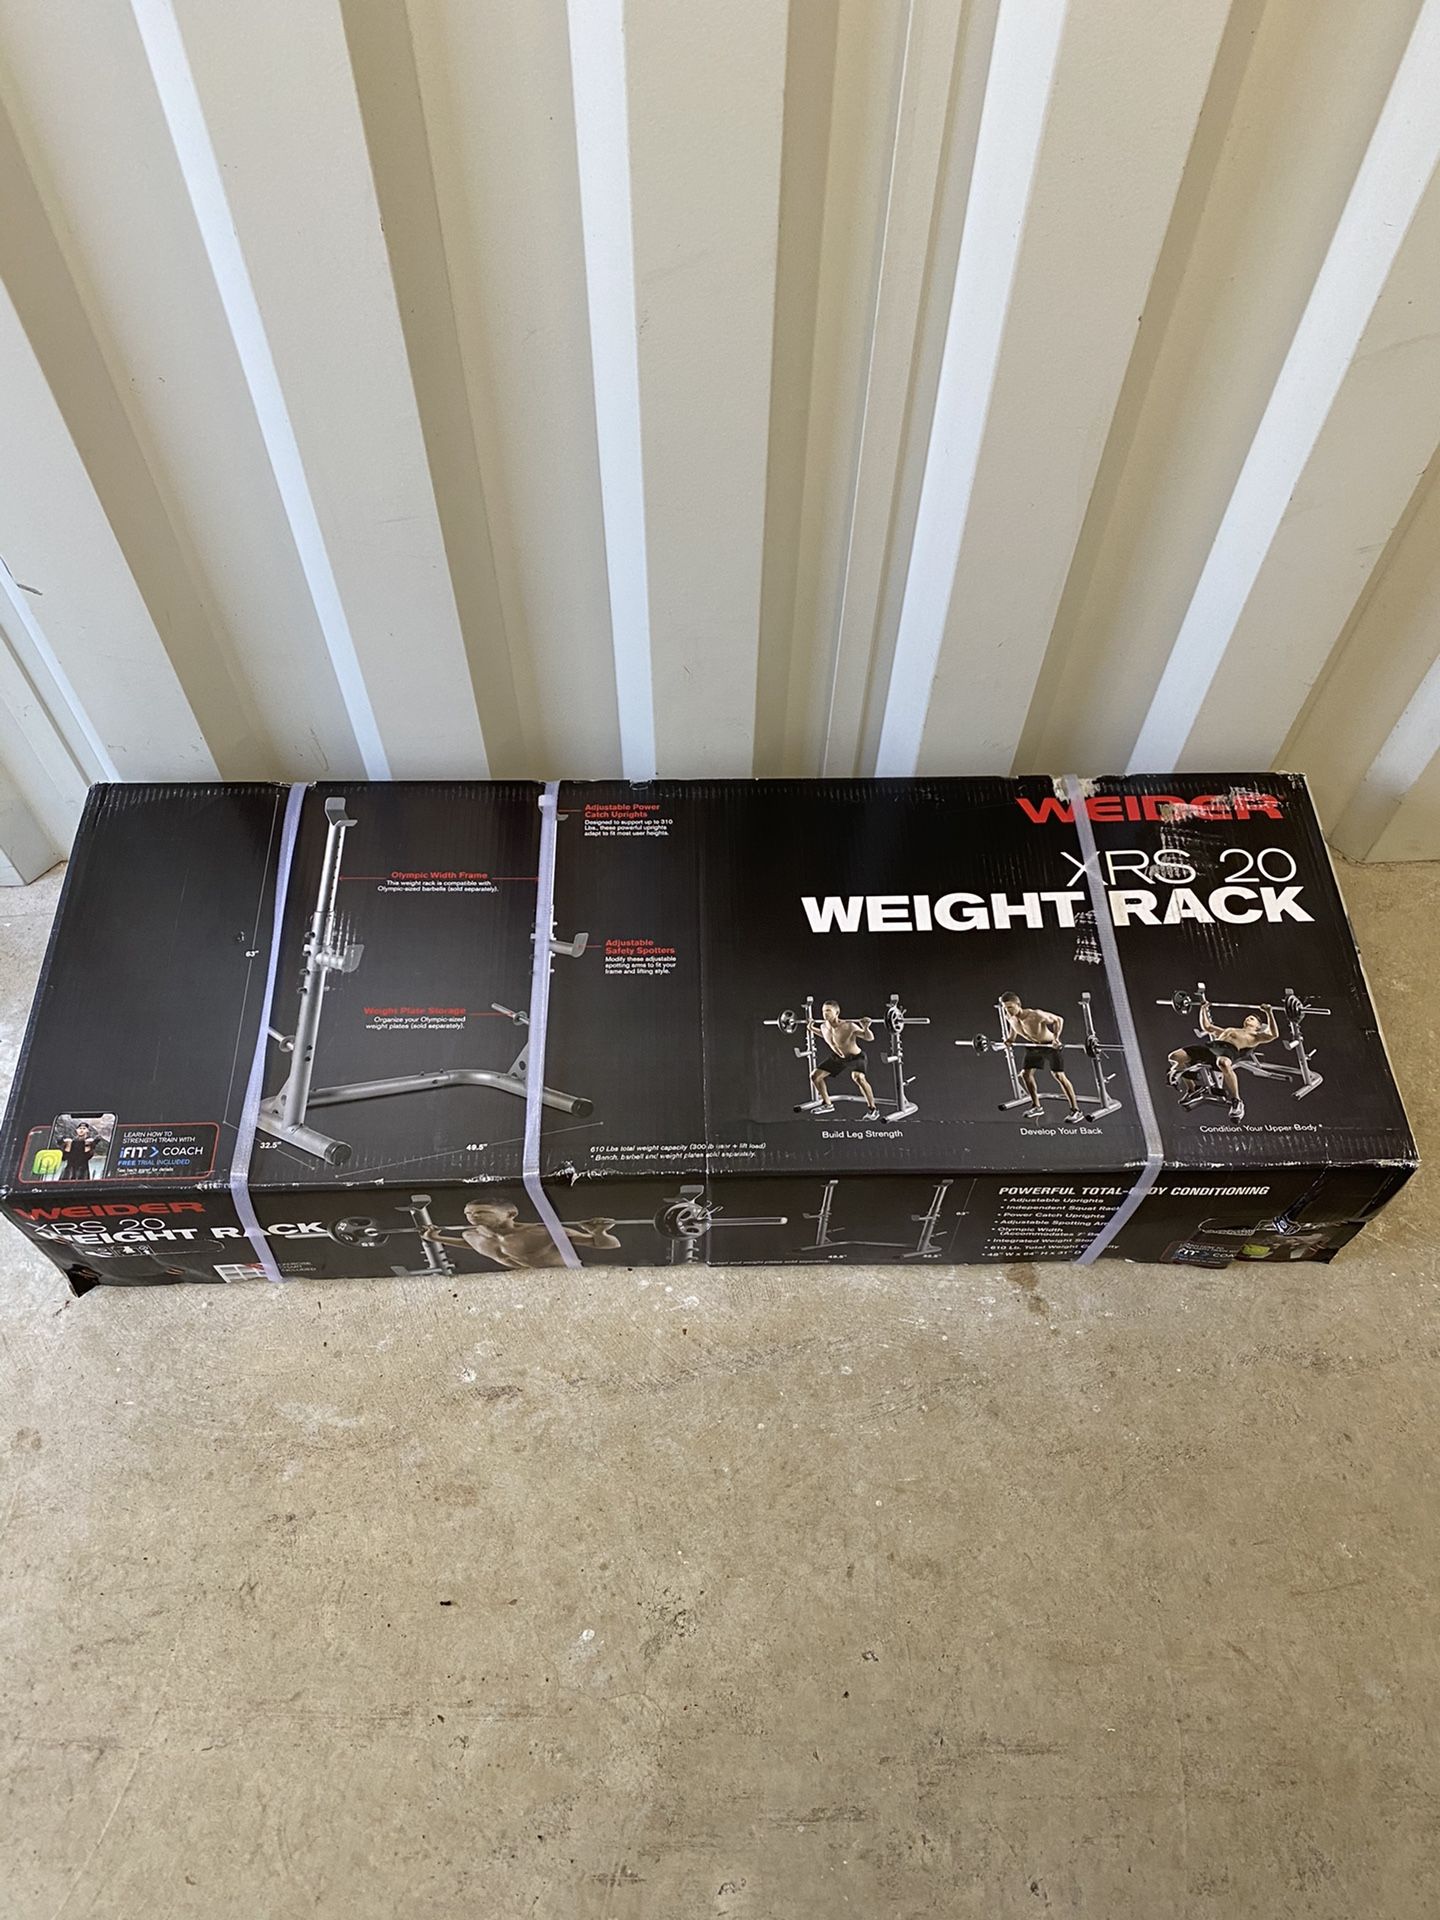 Weight rack